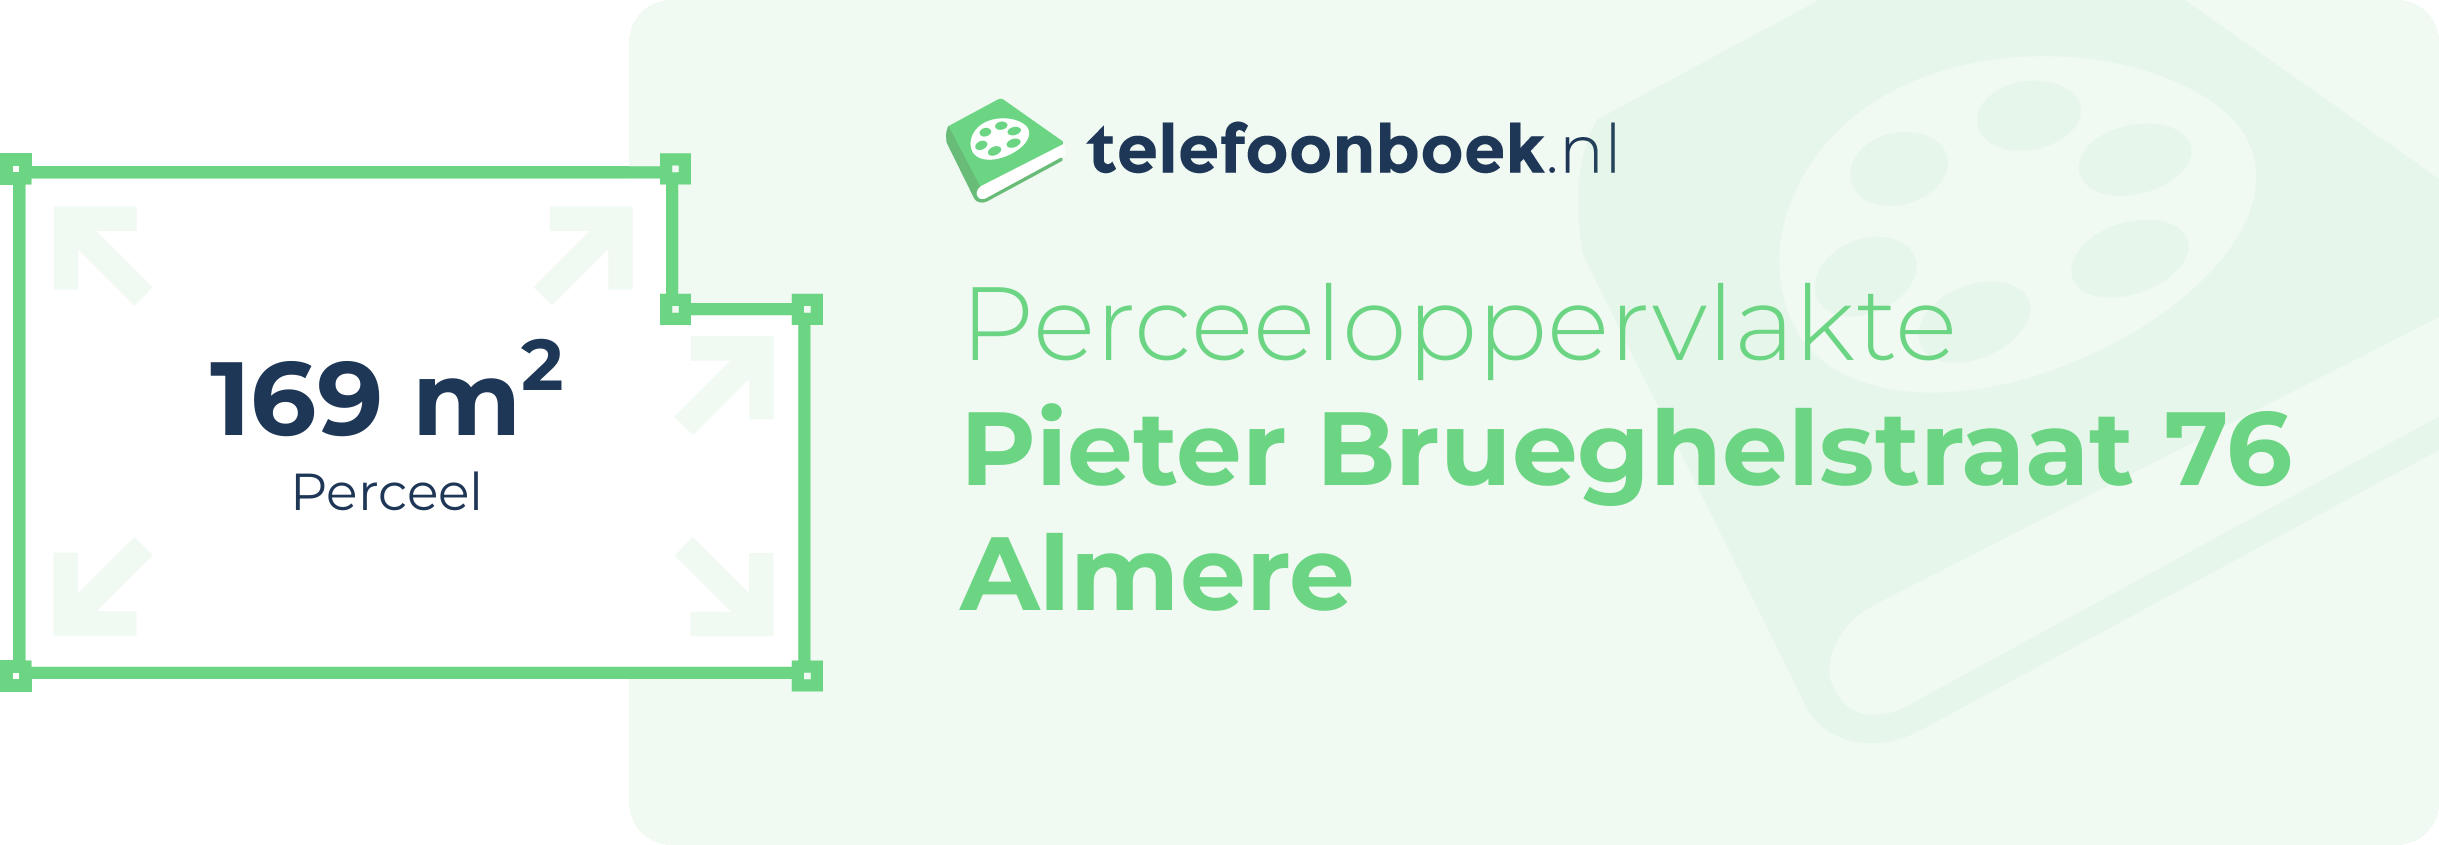 Perceeloppervlakte Pieter Brueghelstraat 76 Almere